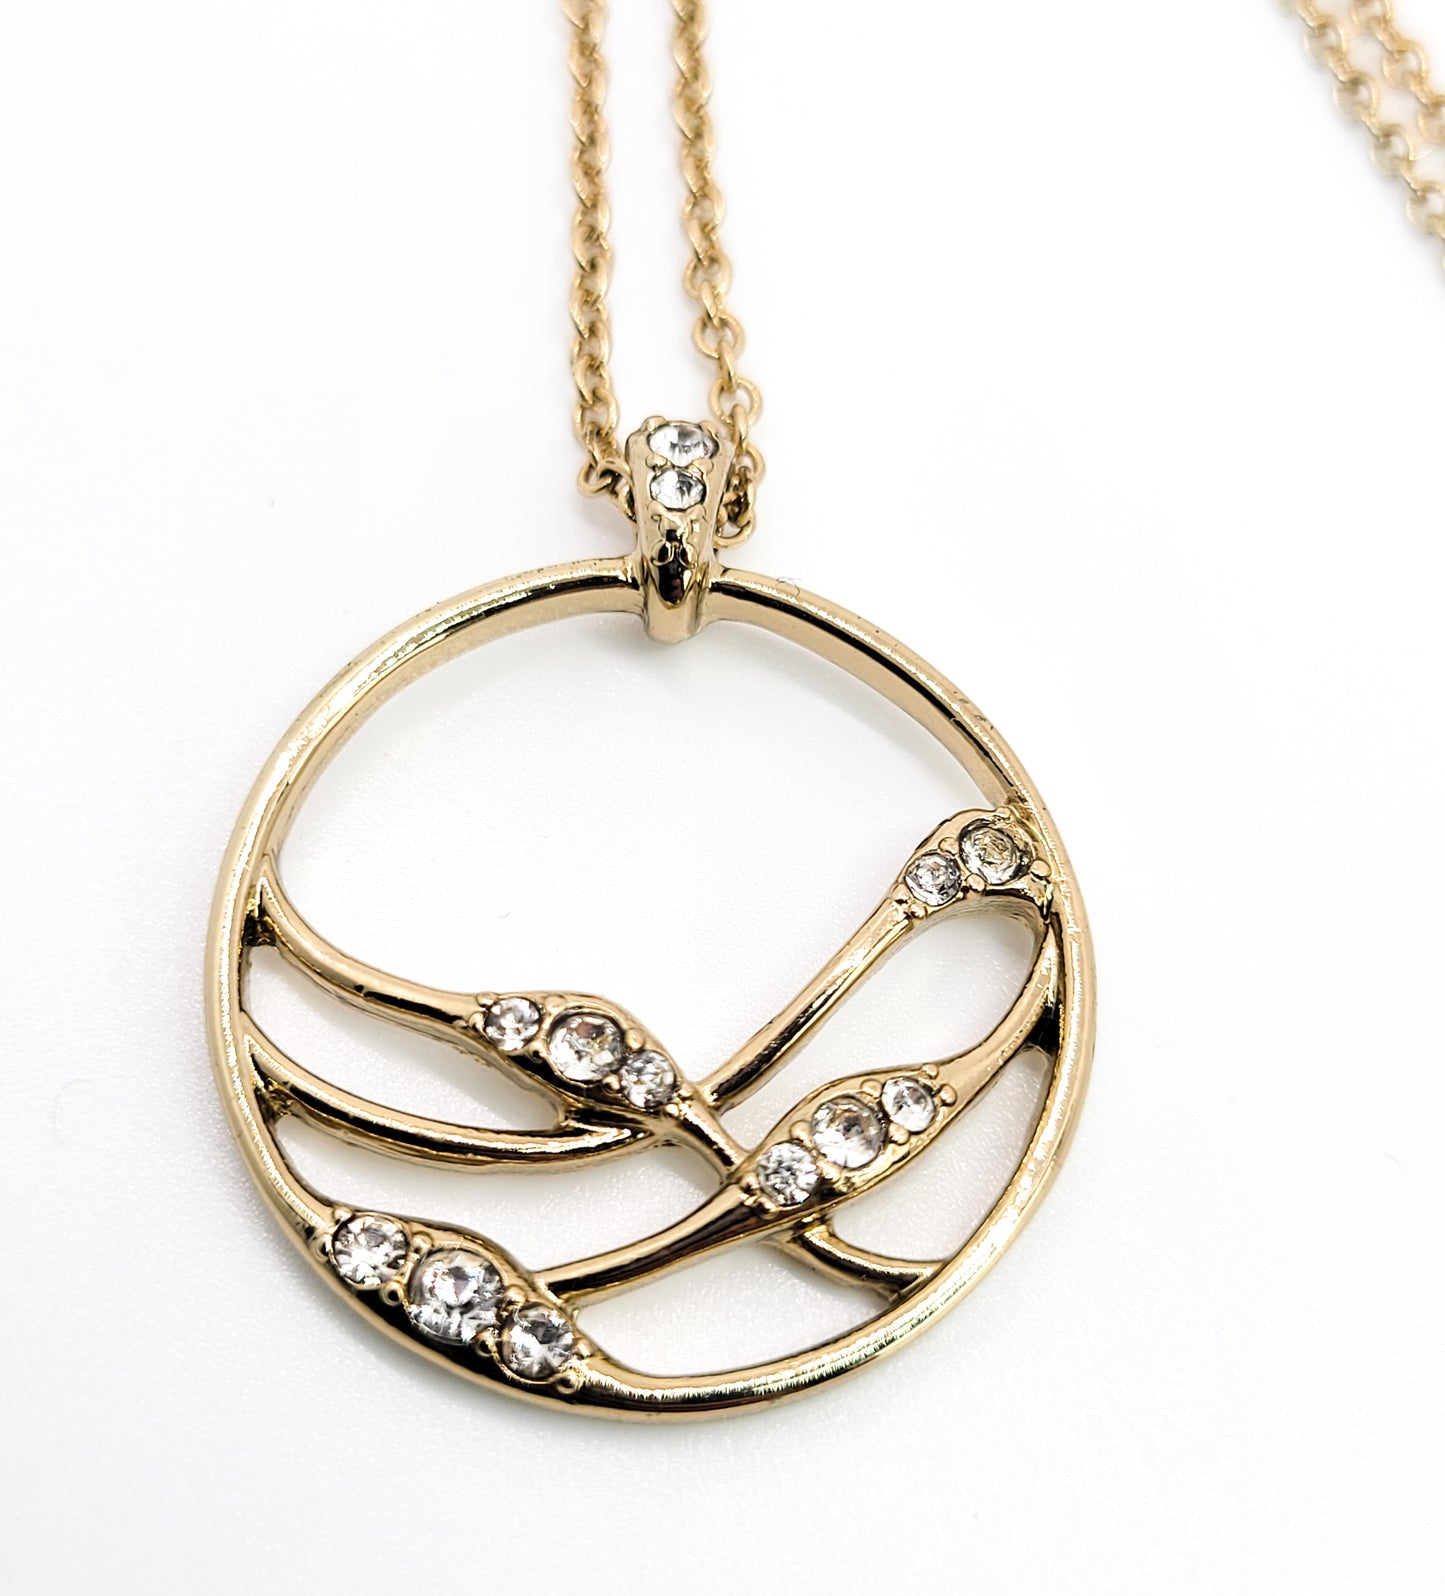 Avon NRT signed vintage gold plated circle rhinestone pendant necklace